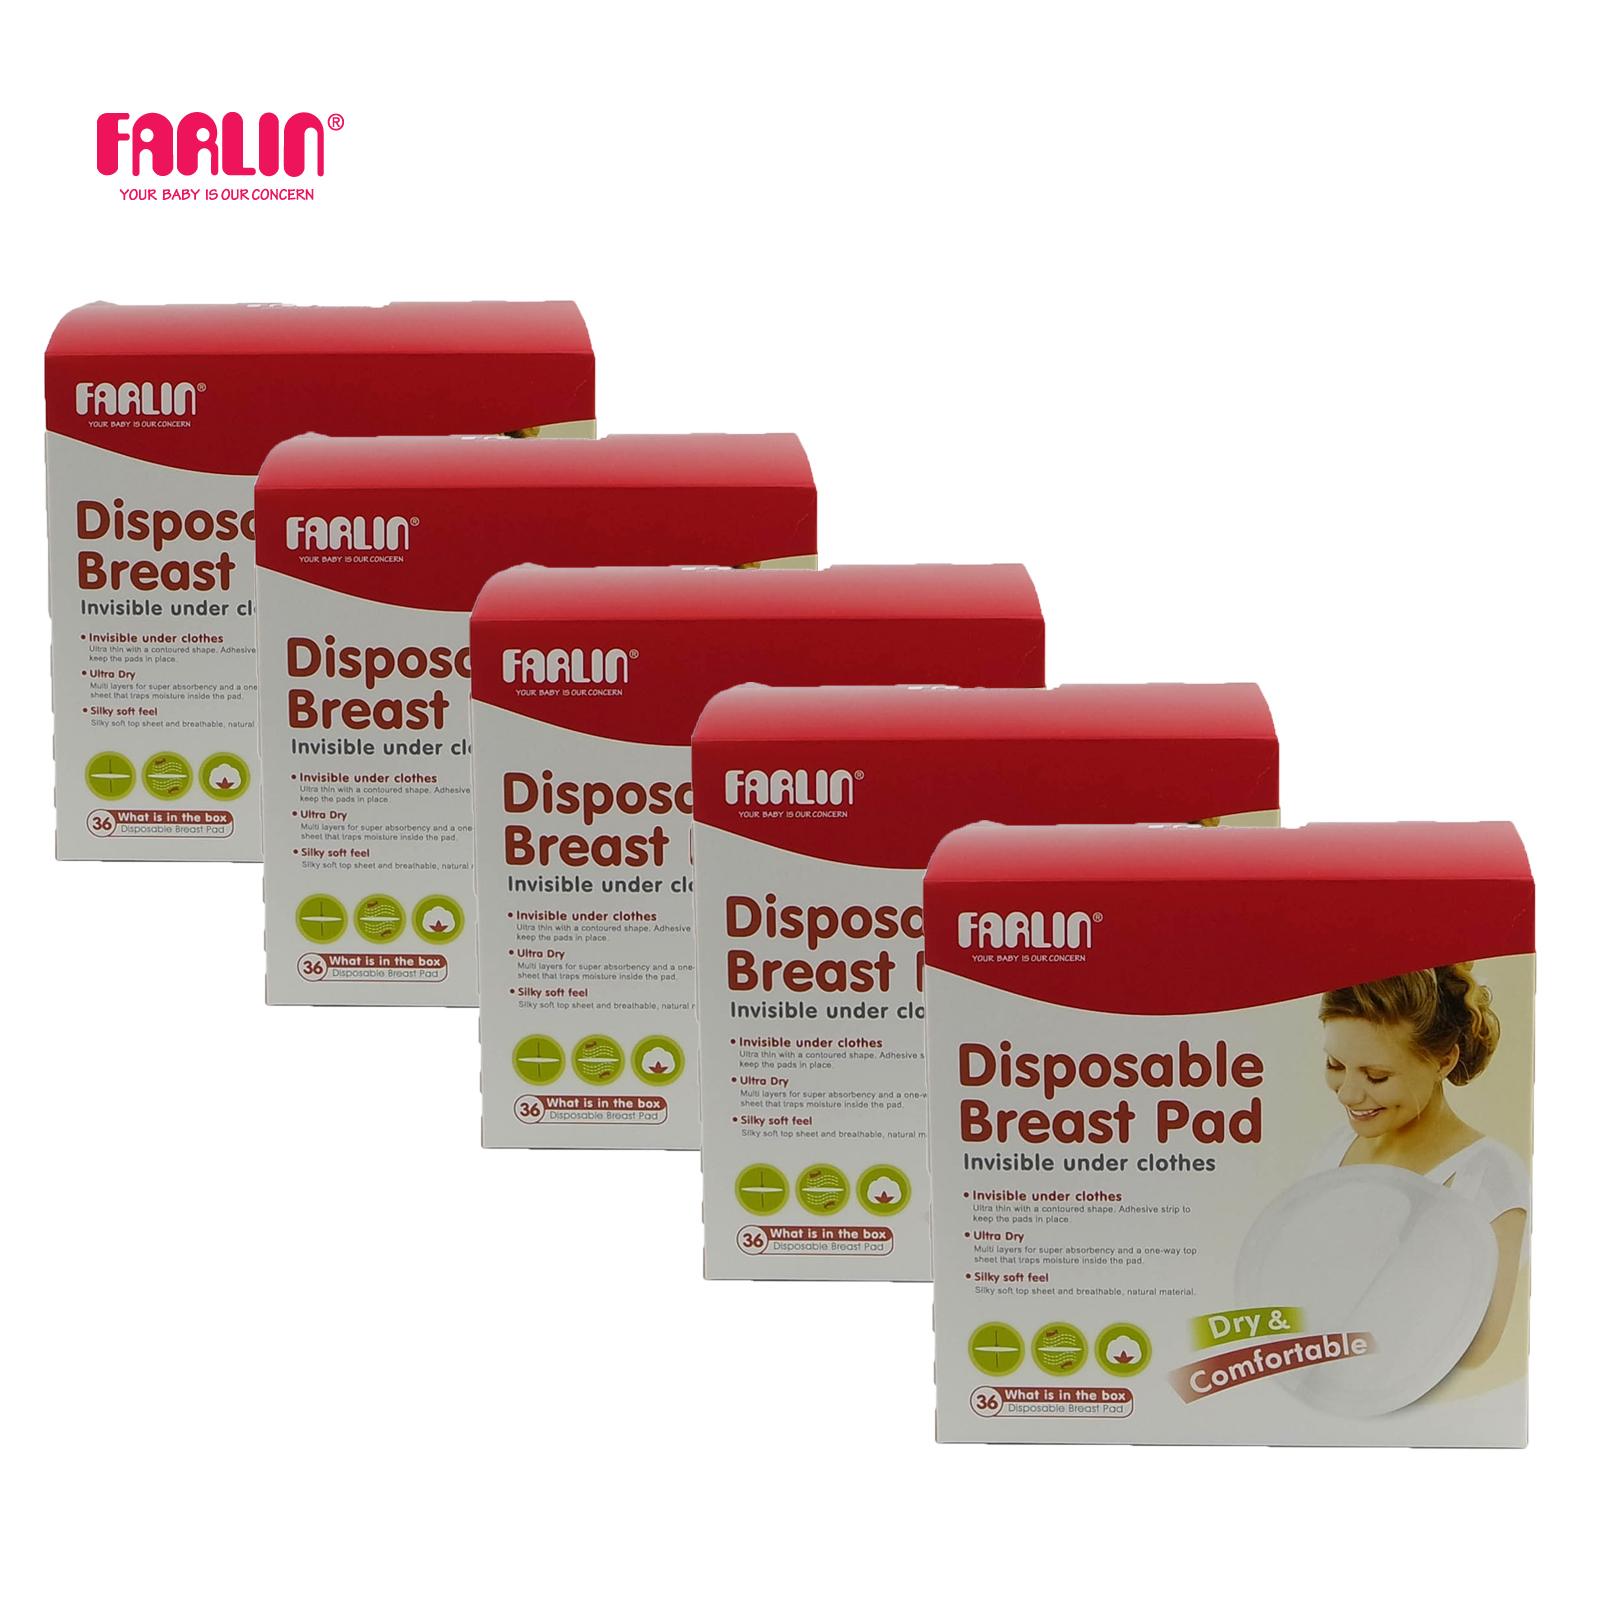 Farlin Disposable Breast Pad